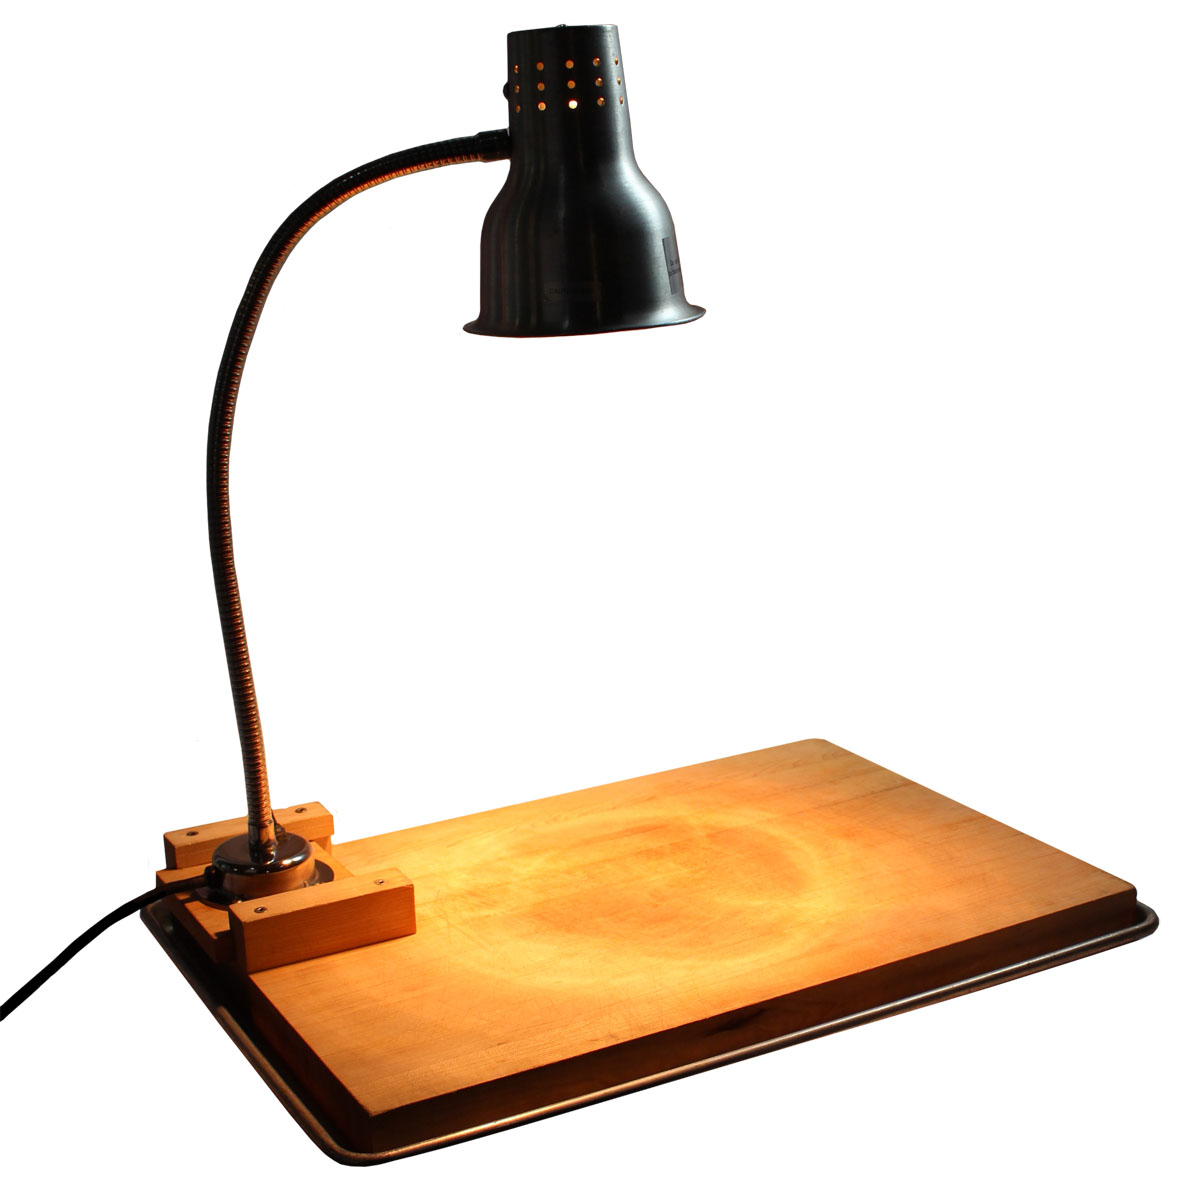 Heat Lamp with Board & Pan